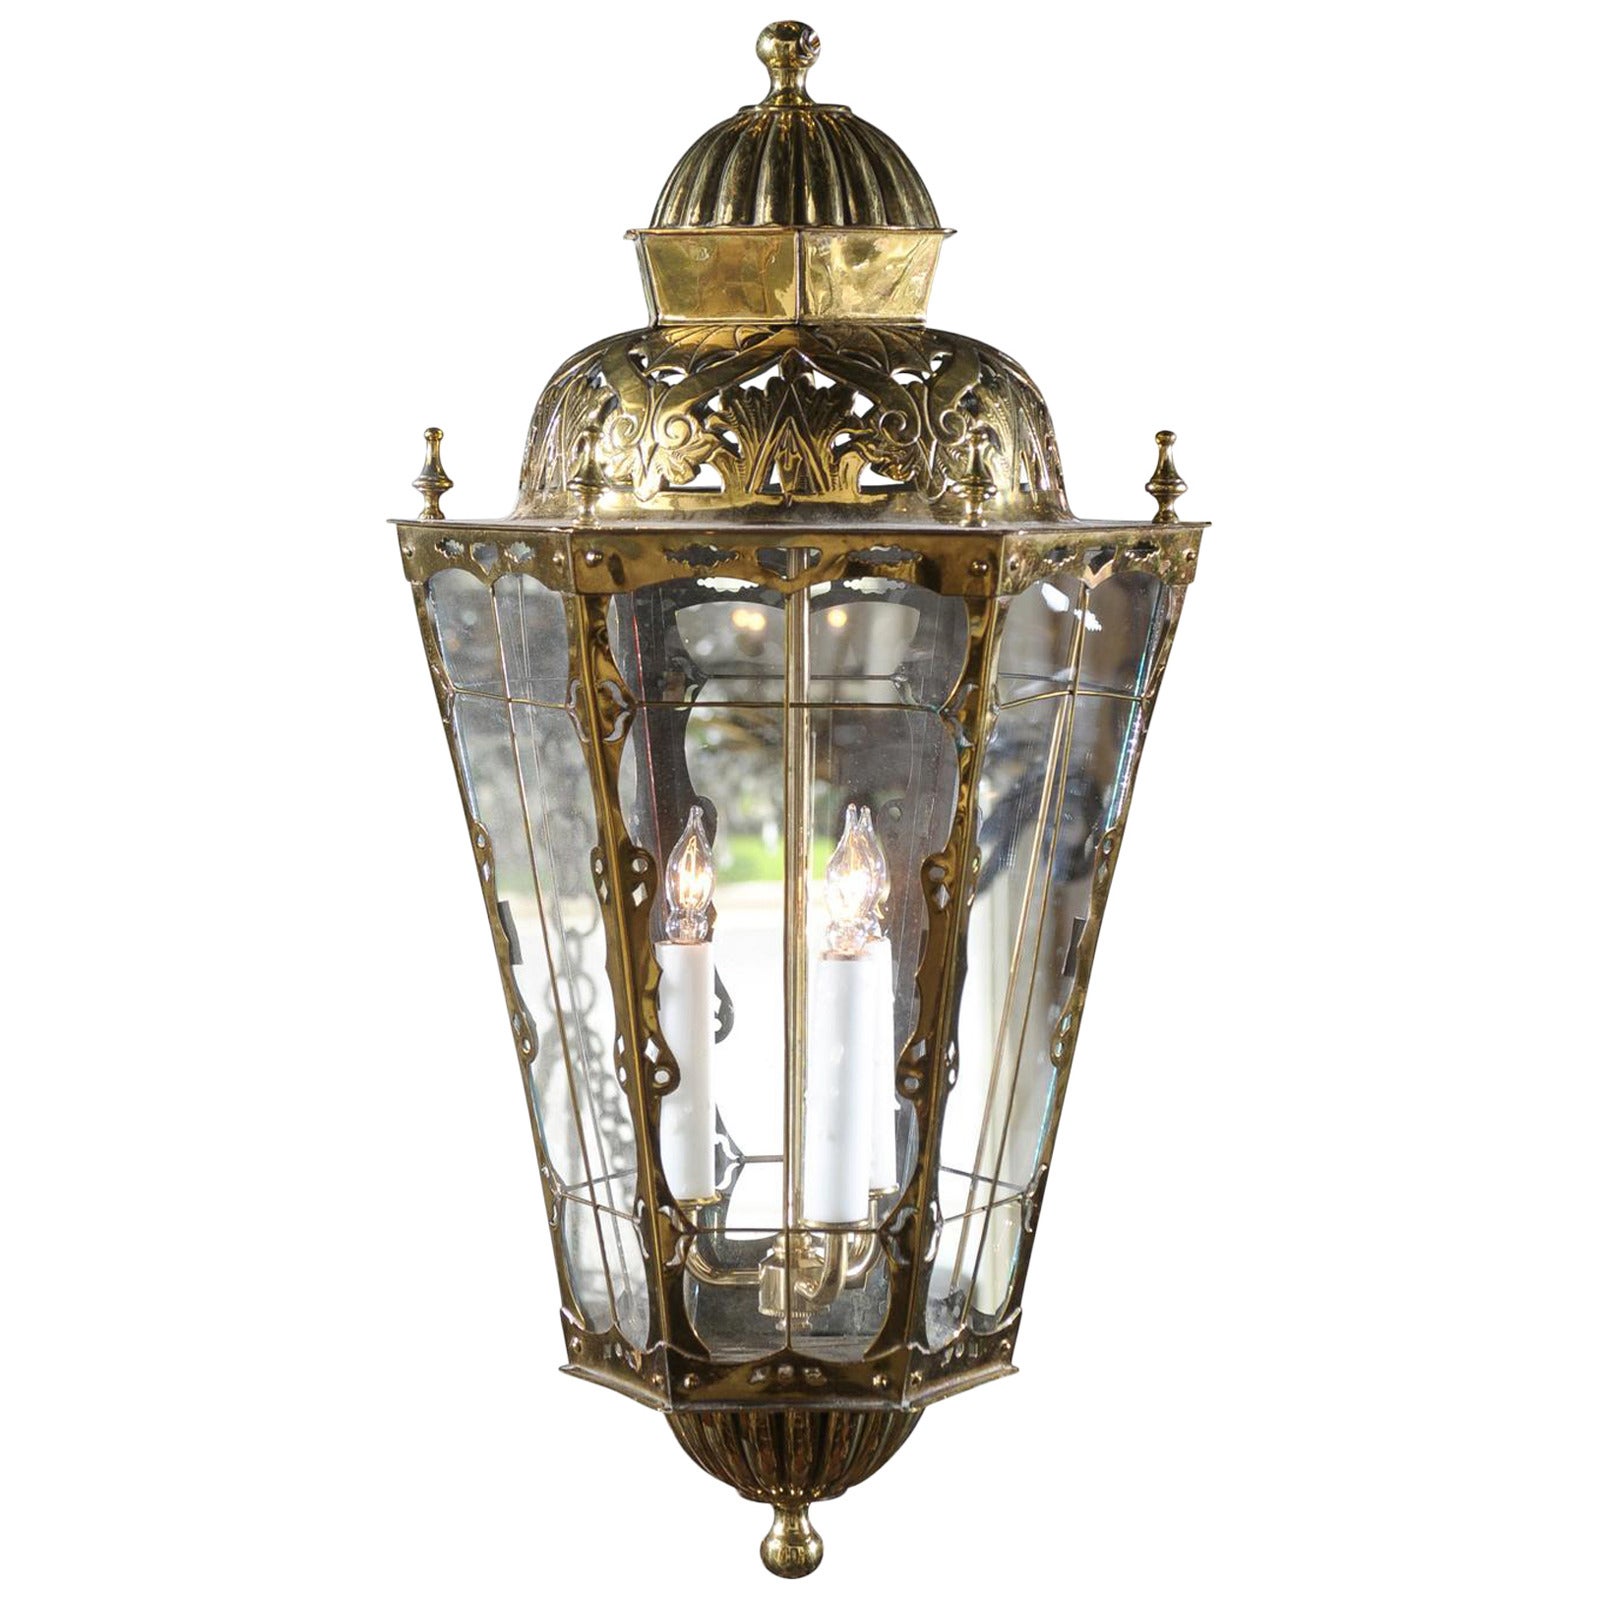 English Brass Three-Light Lantern with Glass Panels and Pierced Top, circa 1890